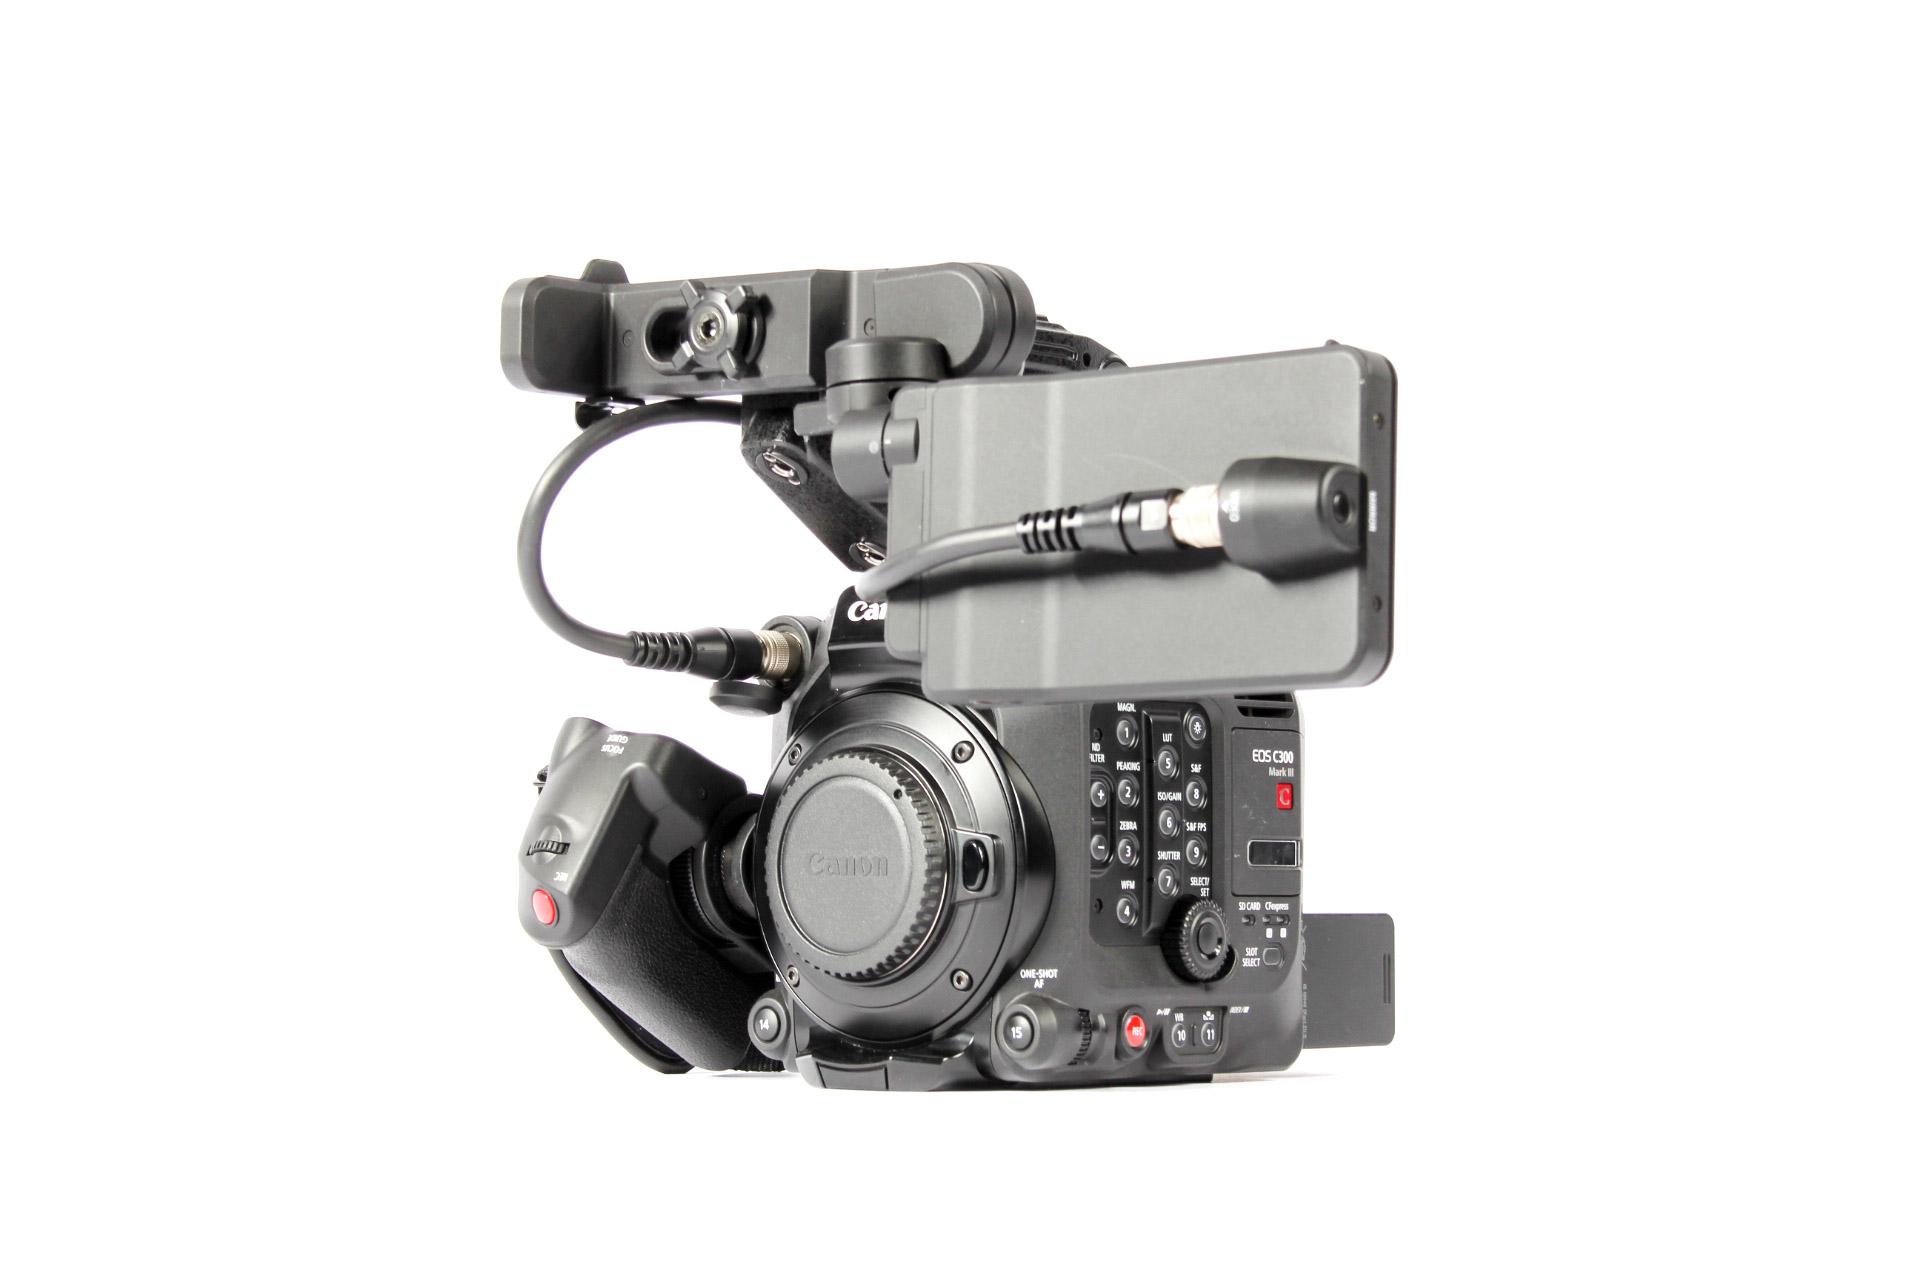 Canon Cinema EOS C300 Mark III: Elevating HDR Recording